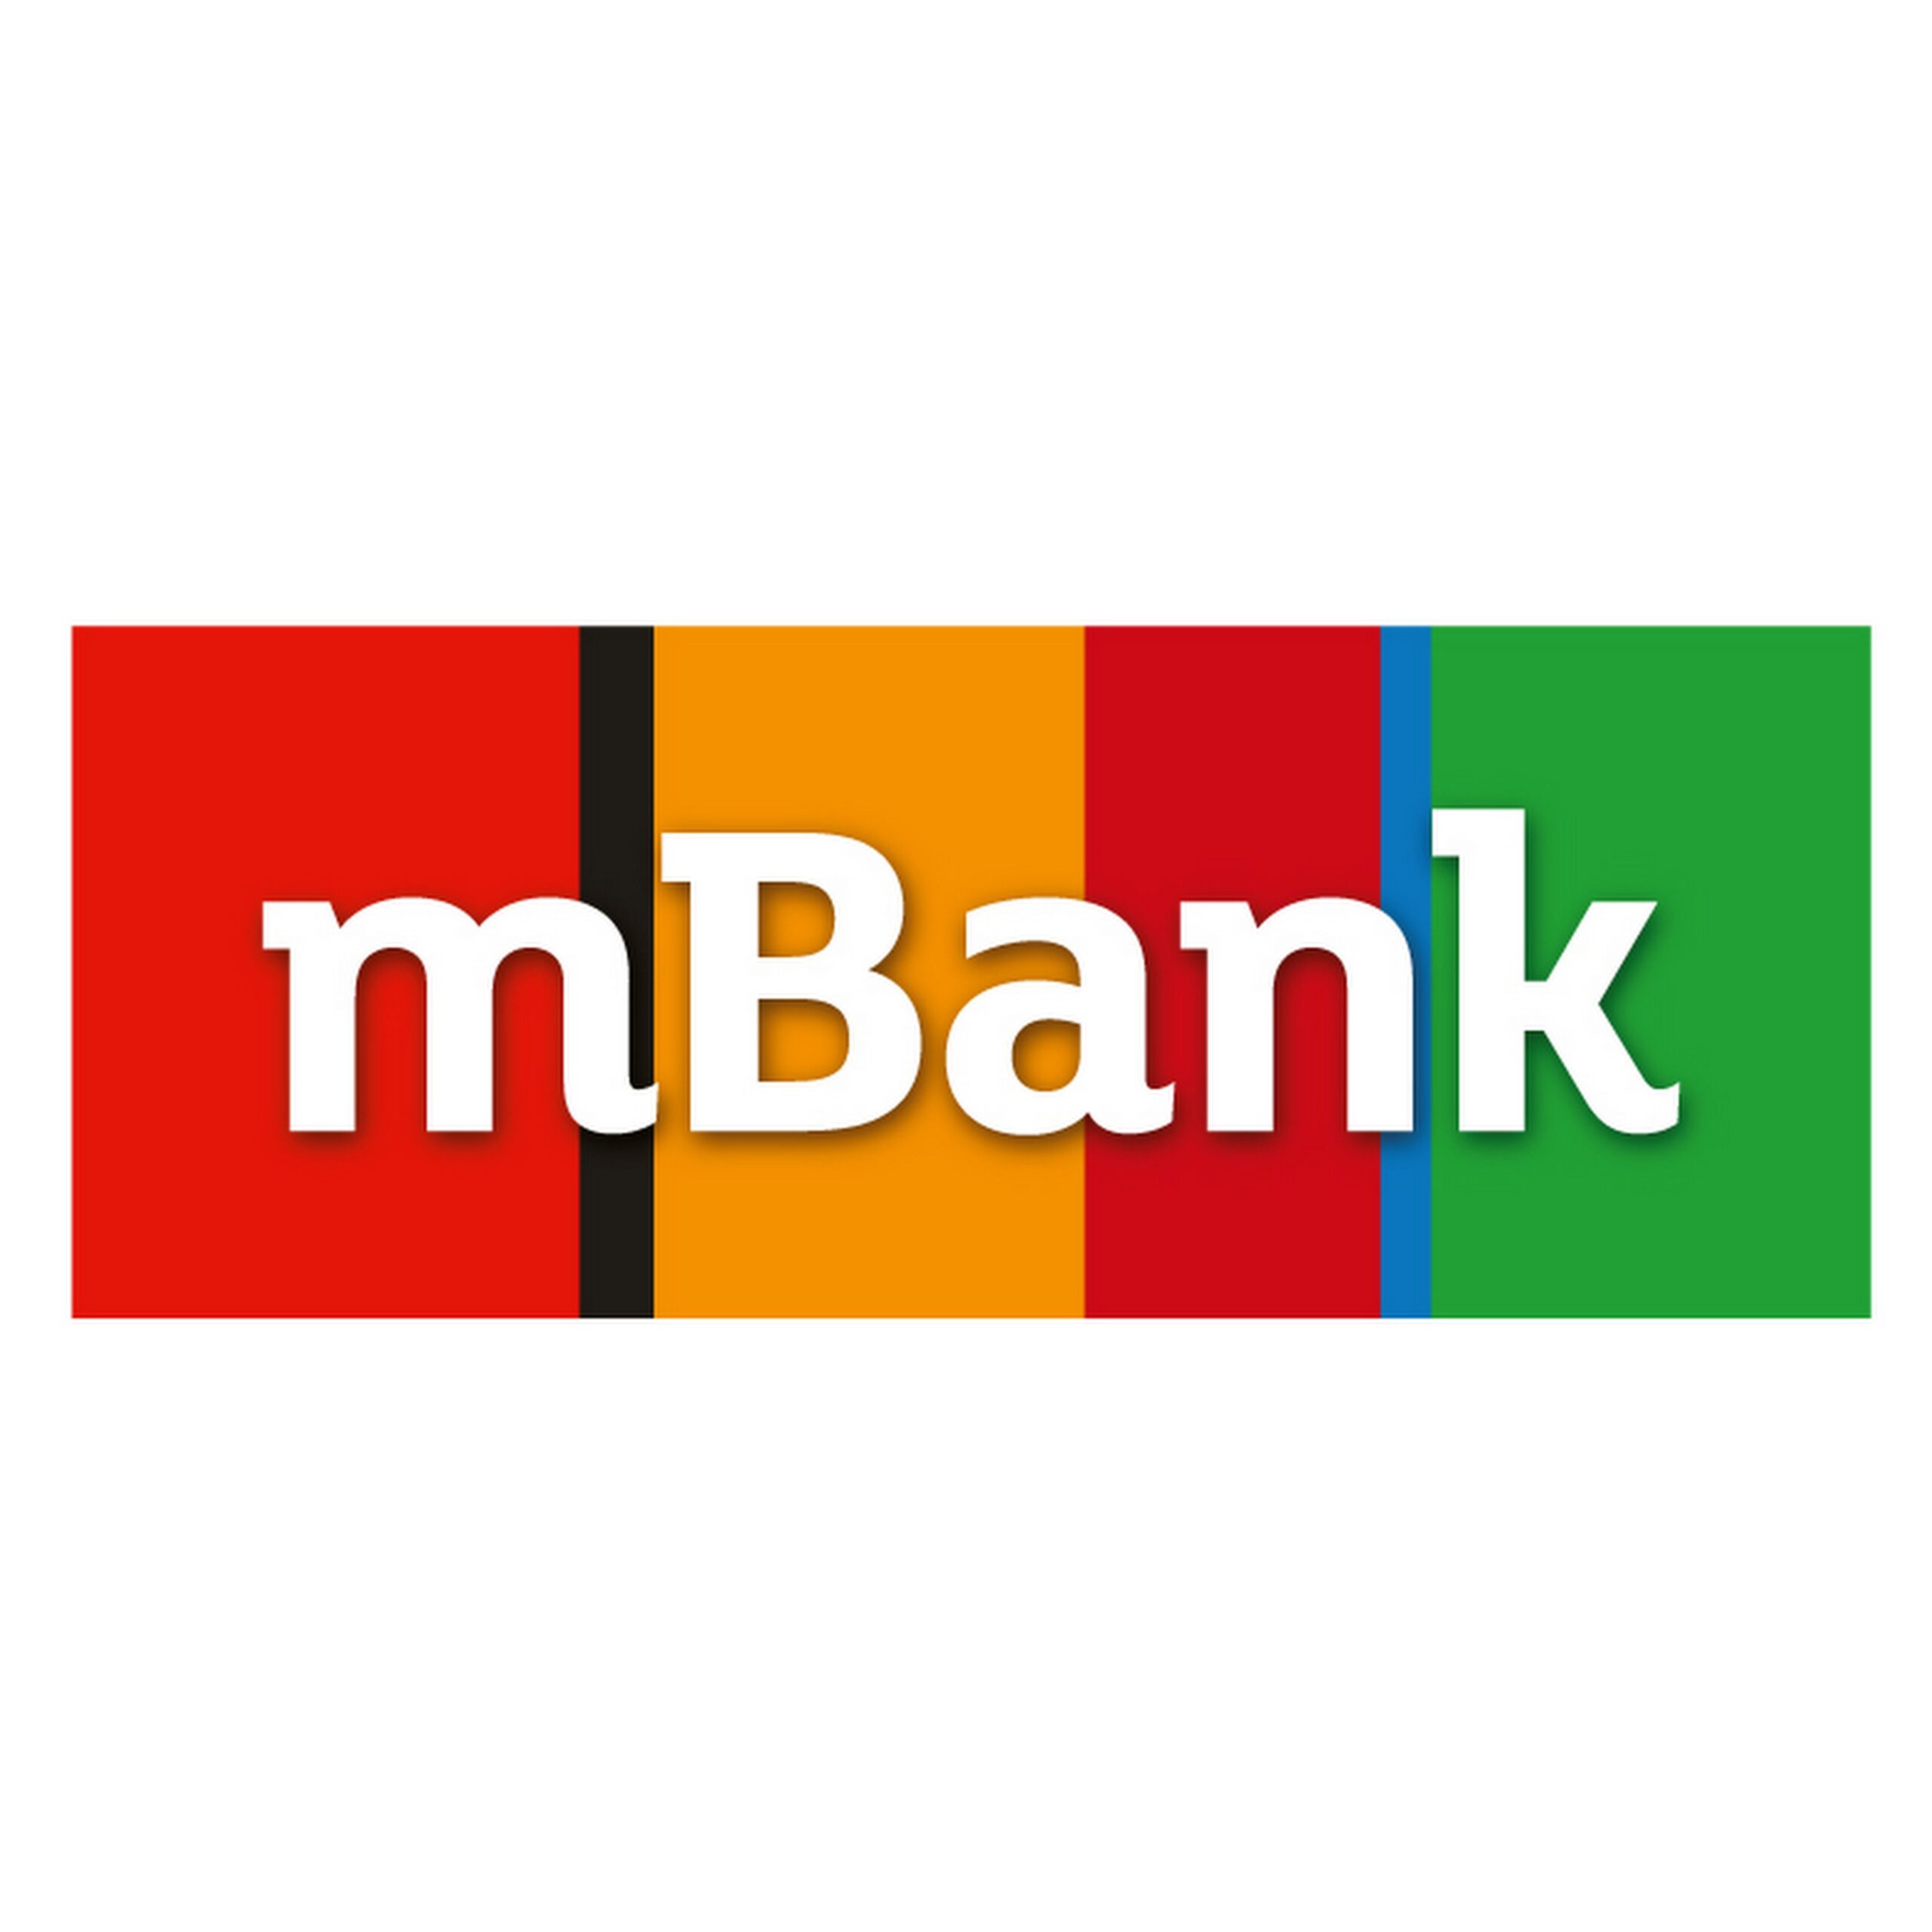 Grupa mBank zakończyła przetarg mBank mediarun com logo mbank scaled